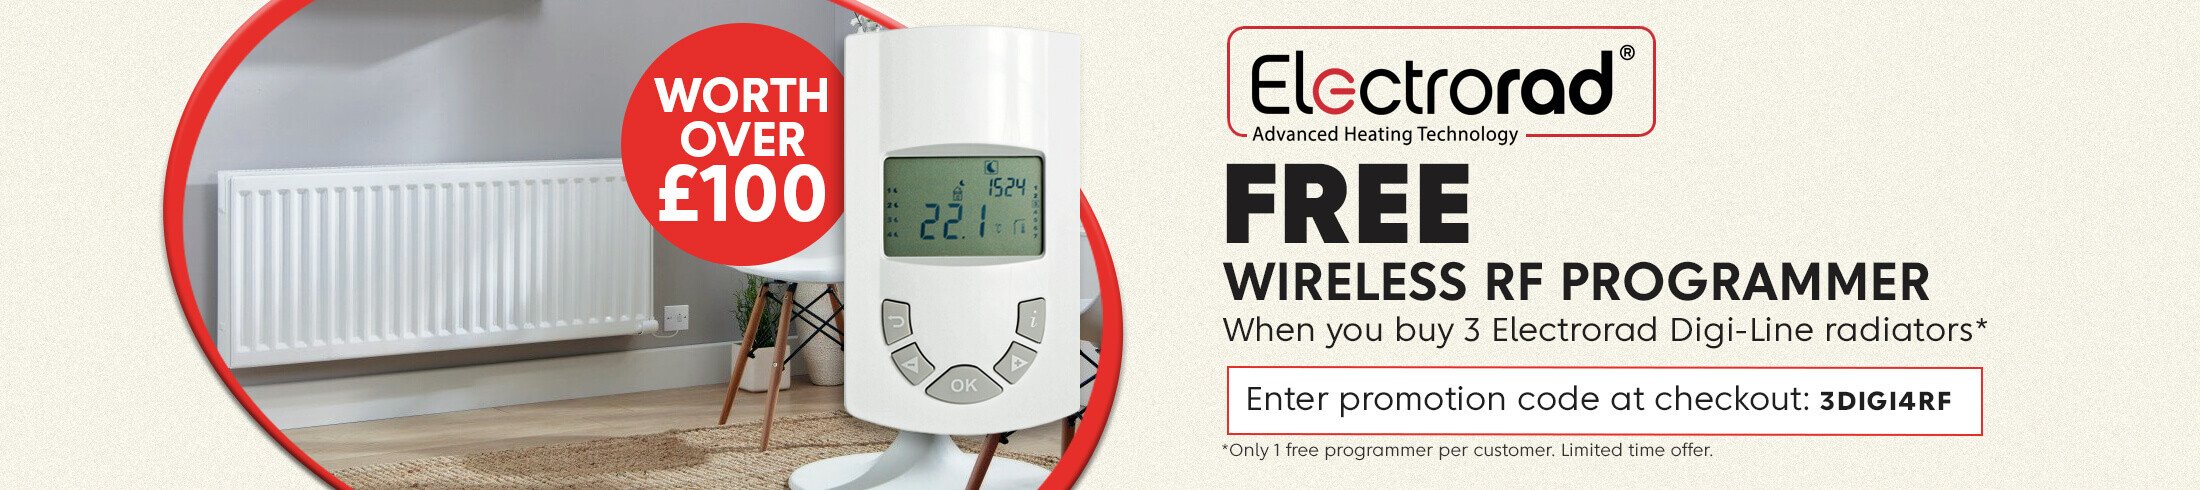 Free Electrorad Digi-Line Wireless Programmer